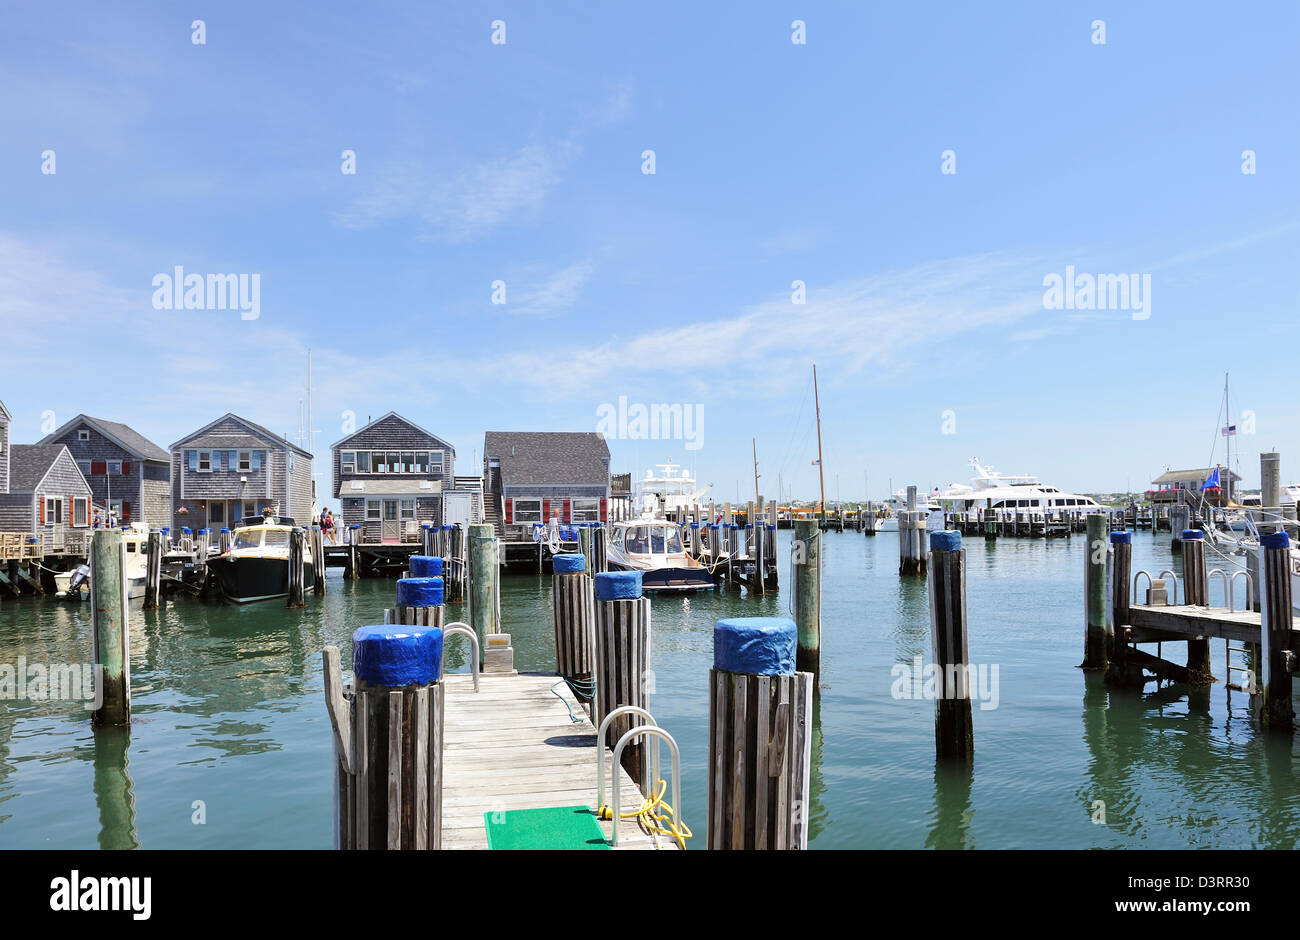 Le port de Nantucket, l'île de Nantucket, MA Banque D'Images